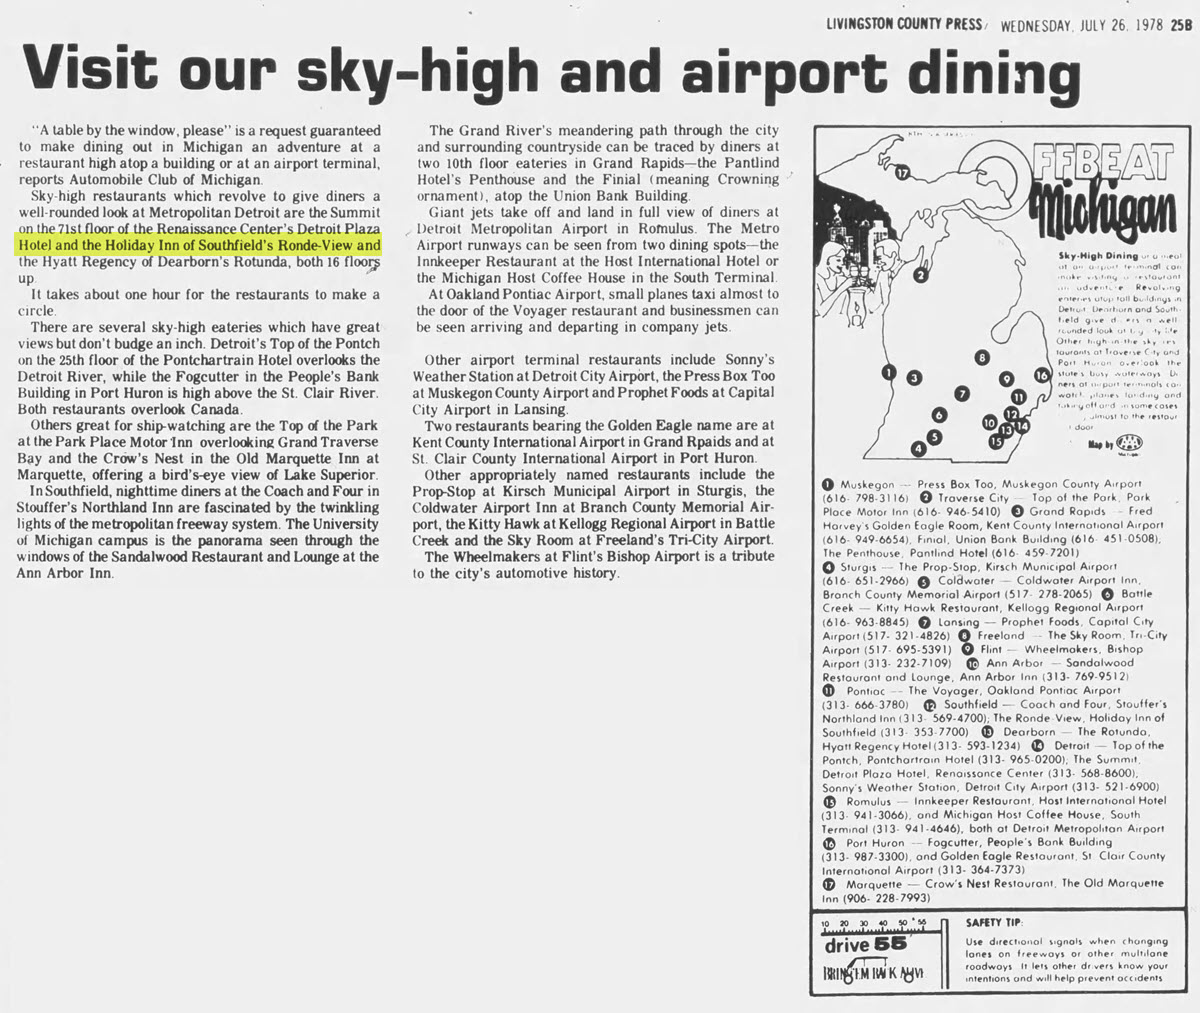 Holiday Inn - Southfield (Radisson Hotel Southfield-Detroit) - Jul 26 1978 Listing Of Sky High Dining In Michigan